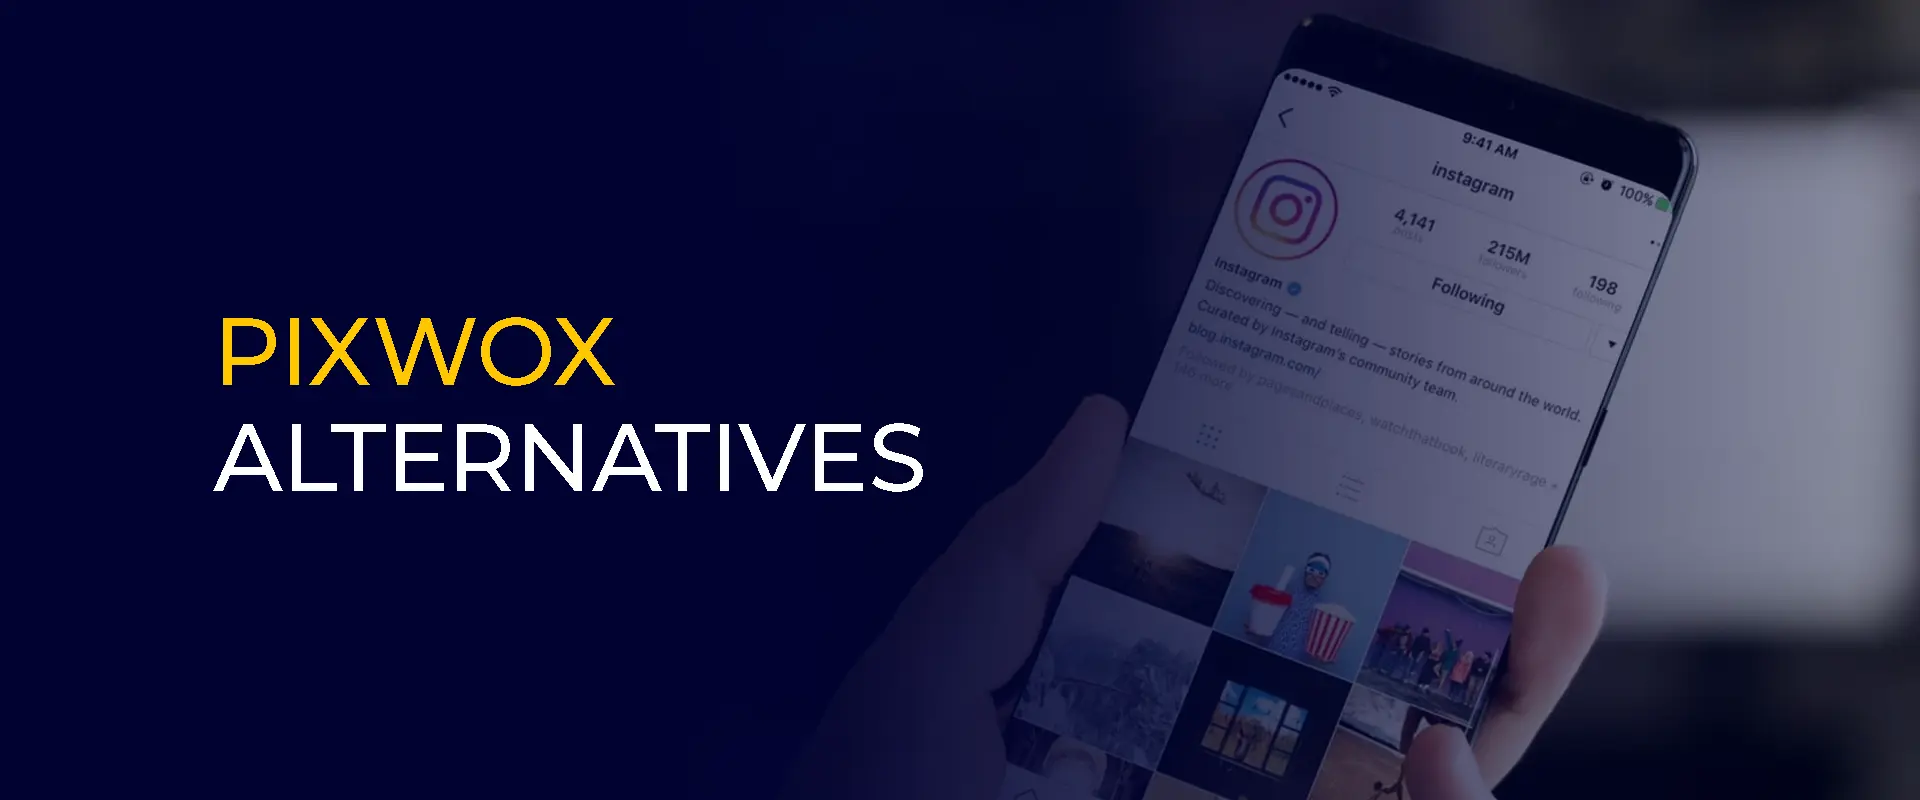 Pixwox-Alternativen